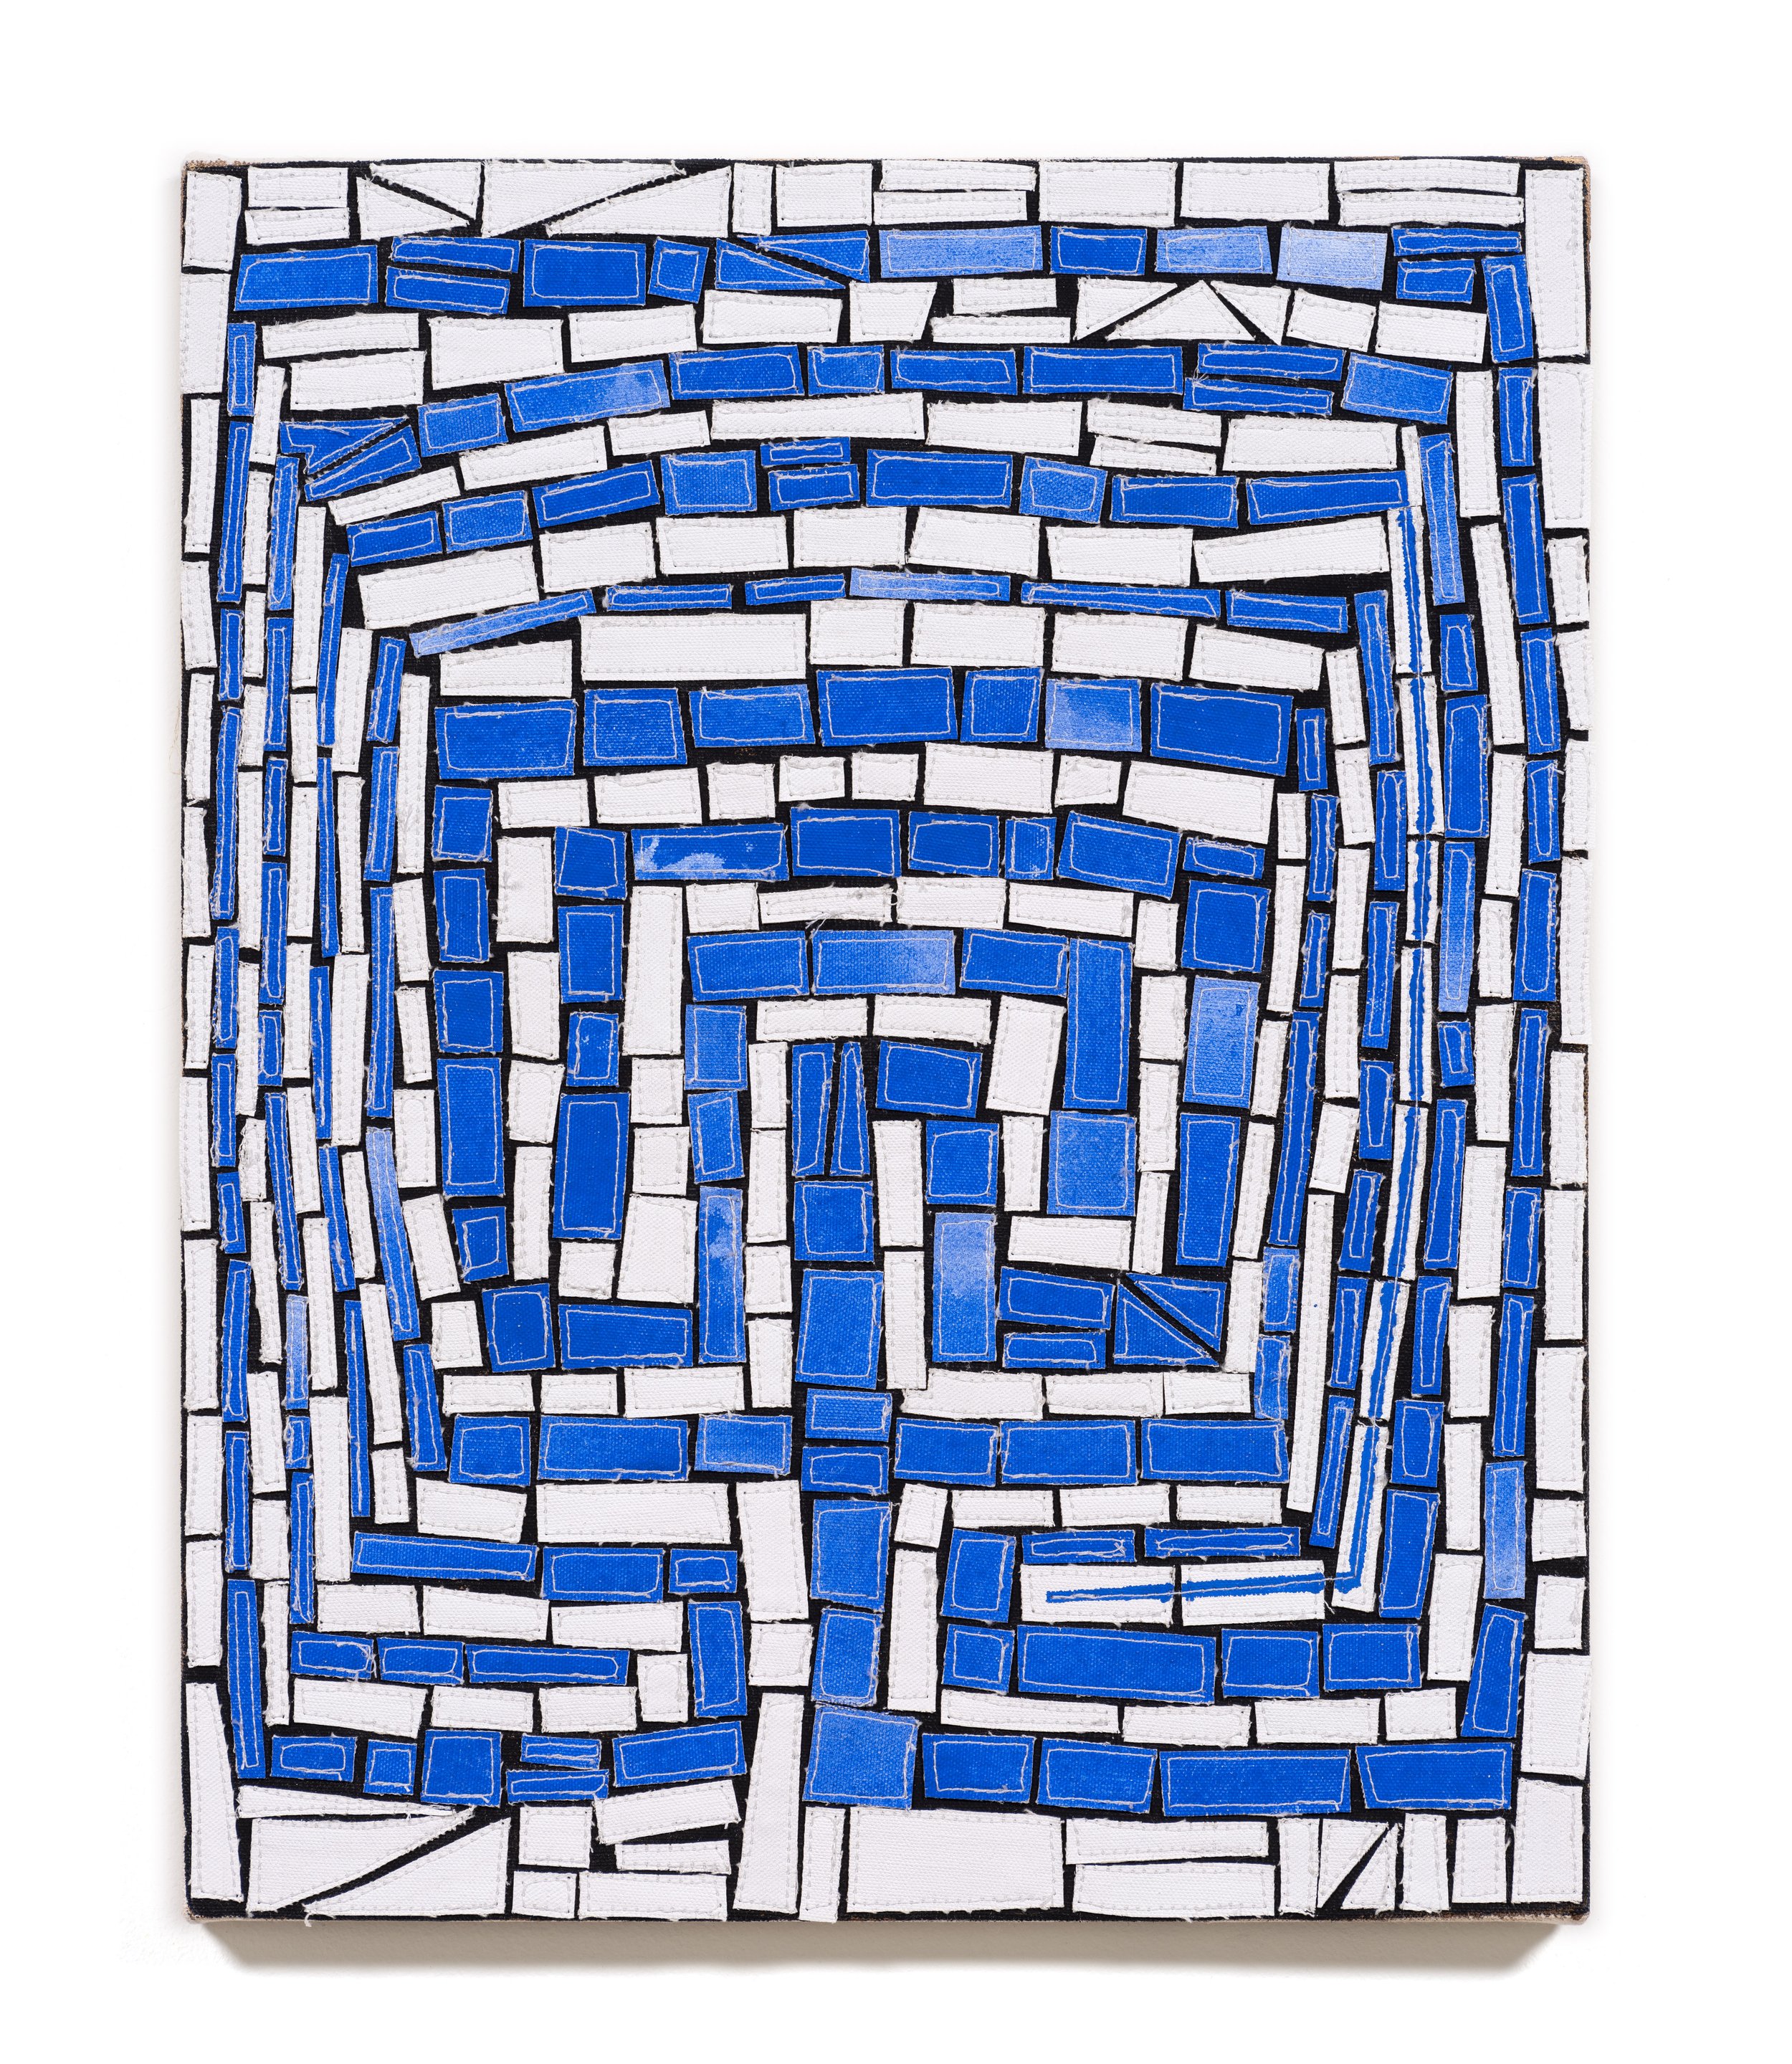   Labyrinth , 2021&nbsp; Flashe, thread, and canvas on canvas&nbsp; 20 x 16 x 3/4 inches&nbsp; 